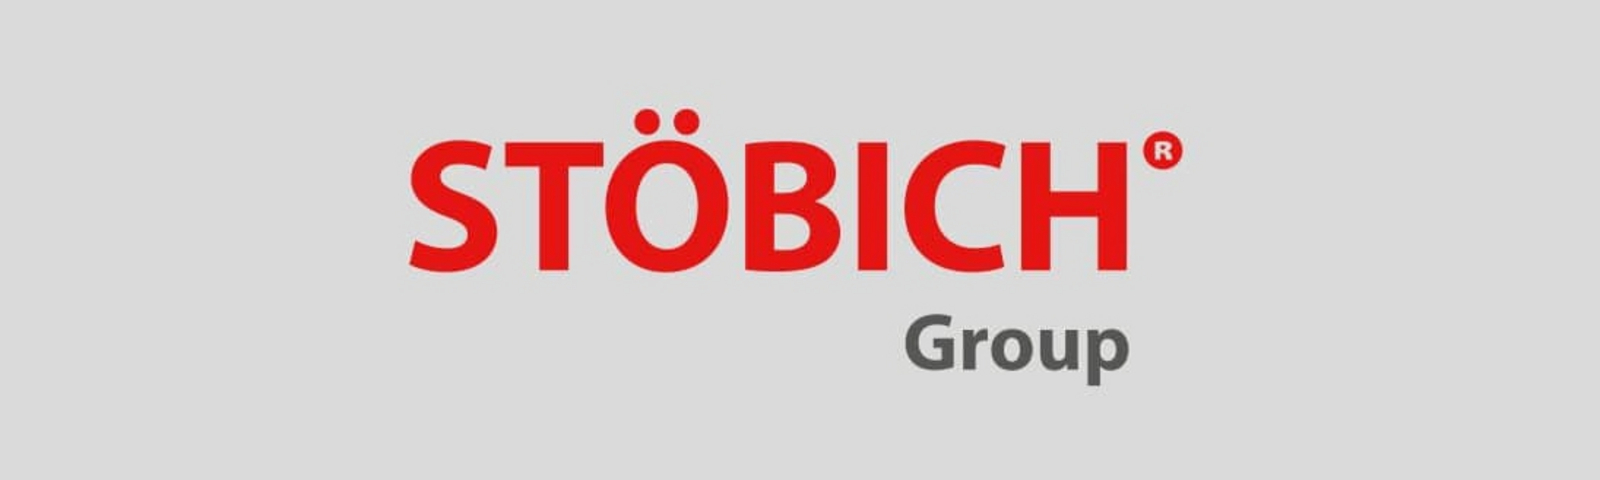 The Stöbich Group